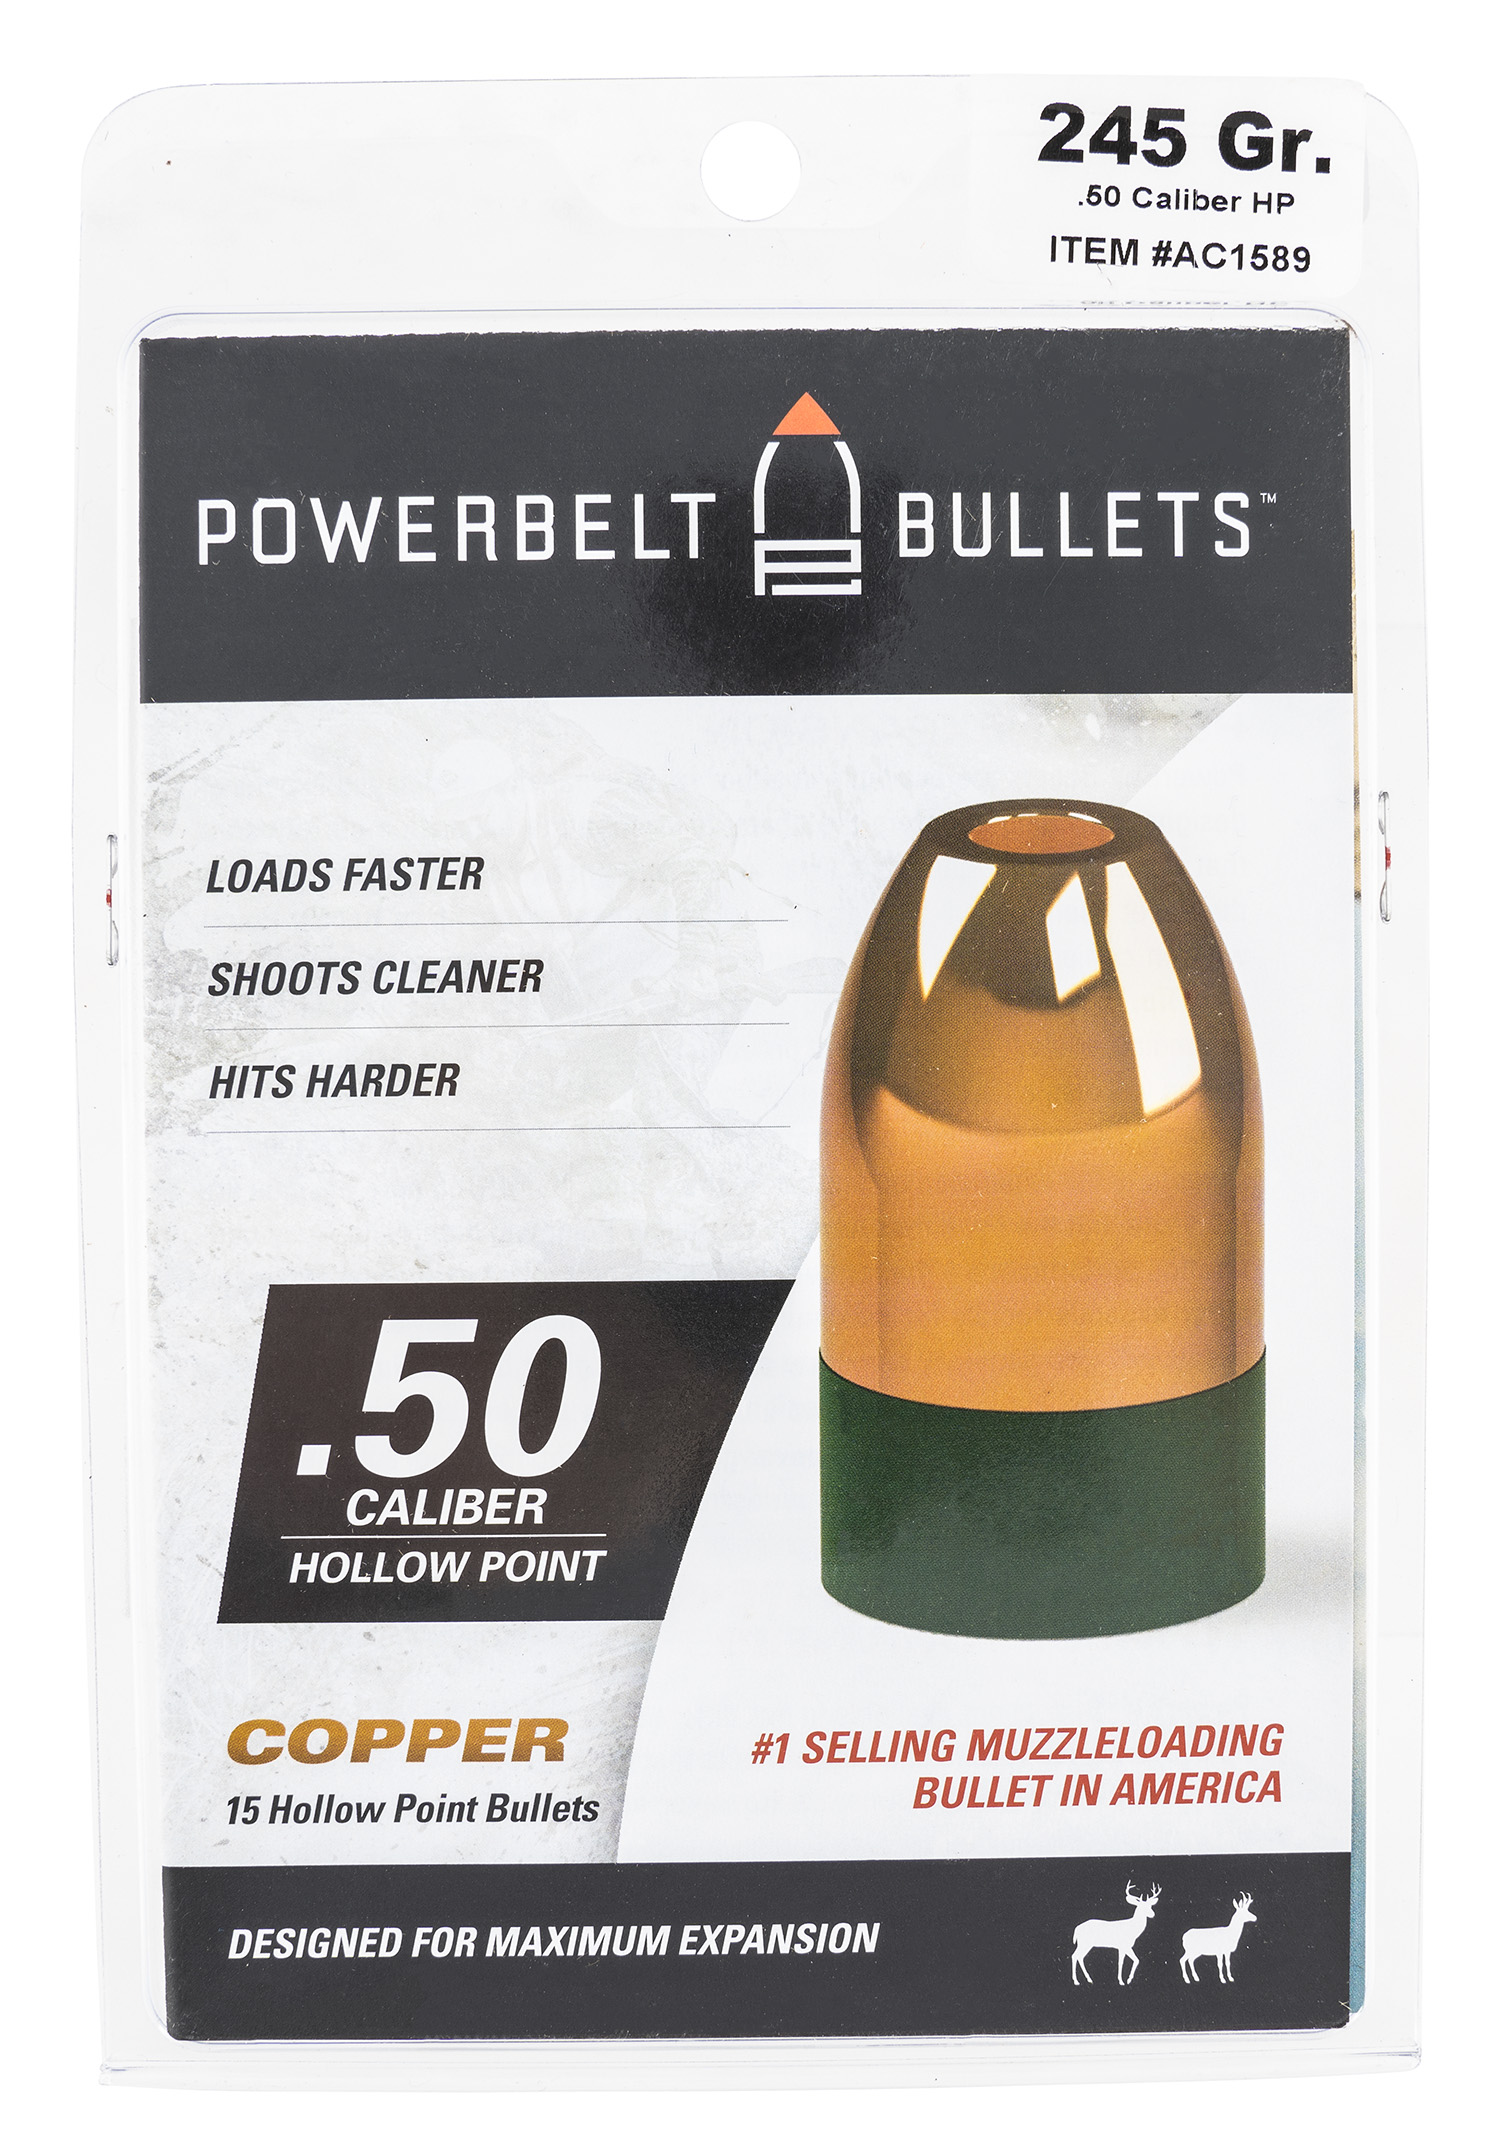 PowerBelt Bullets AC1589 Copper  50 Cal Hollow Point 245 GR 15 Per Box